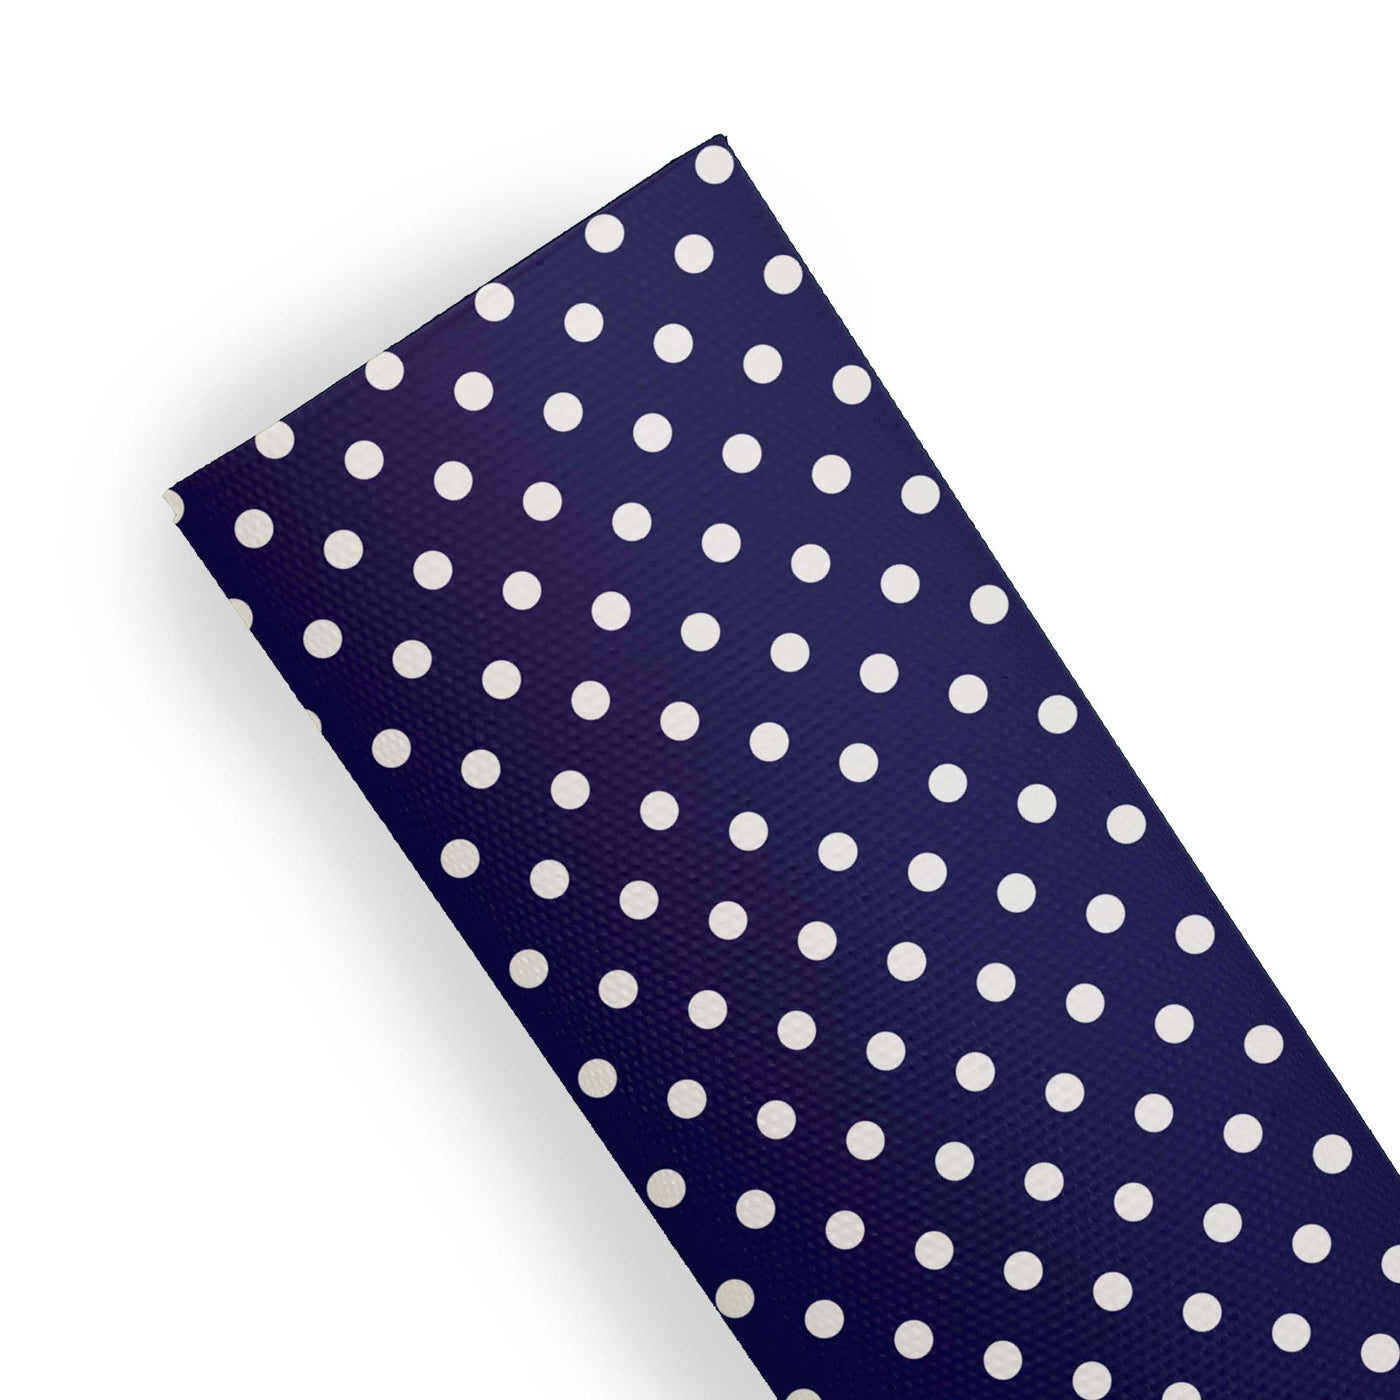 Polka dots colour base - Pu Leather vinyl - canvas - choose Fabric material Sheets